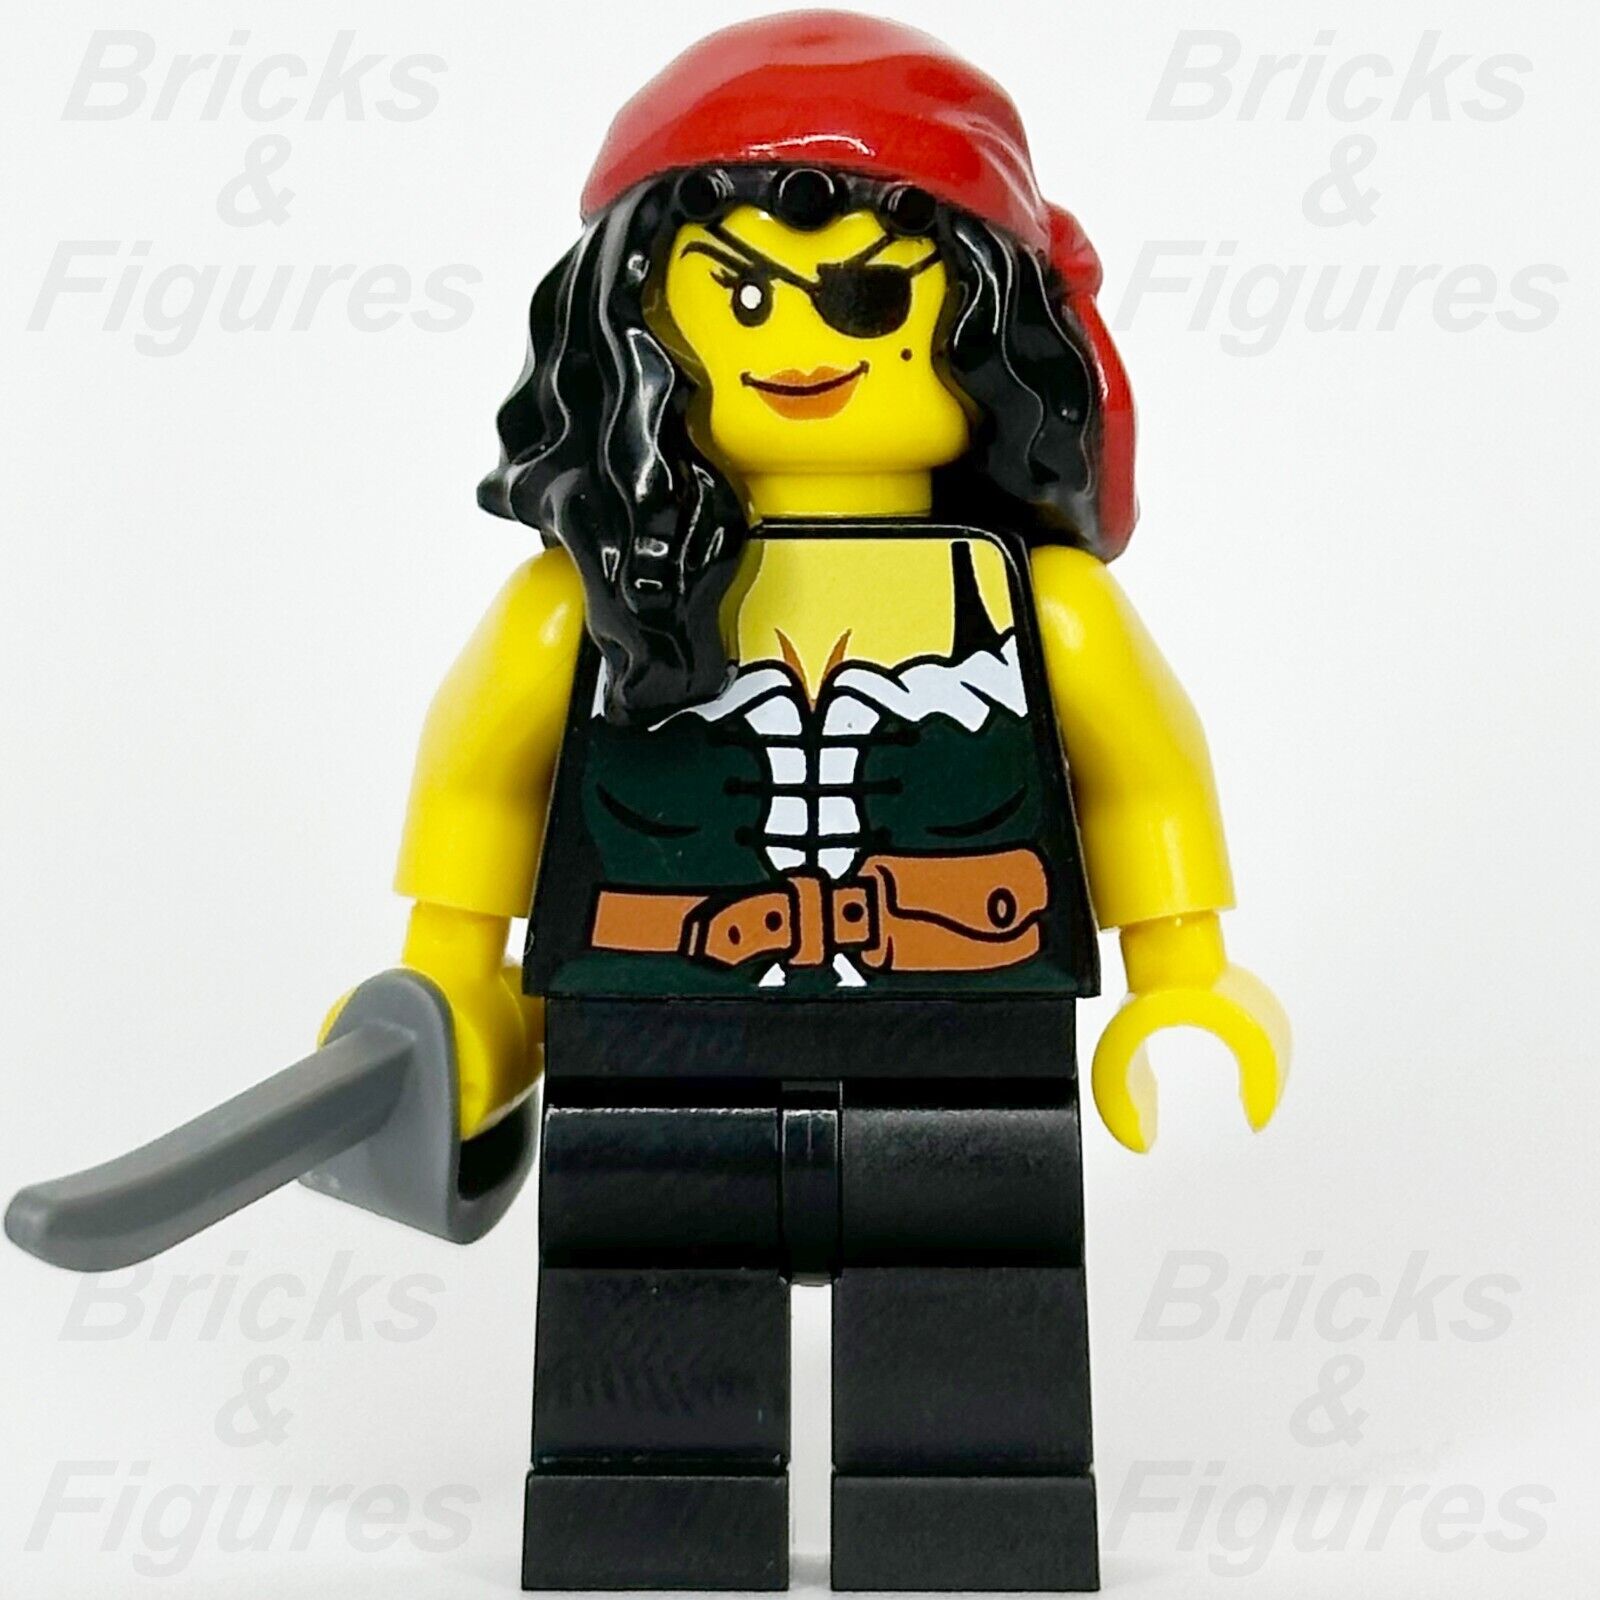 LEGO Pirates Pirate Queen Minifigure Chess III Games 40158 pi172 Minifig